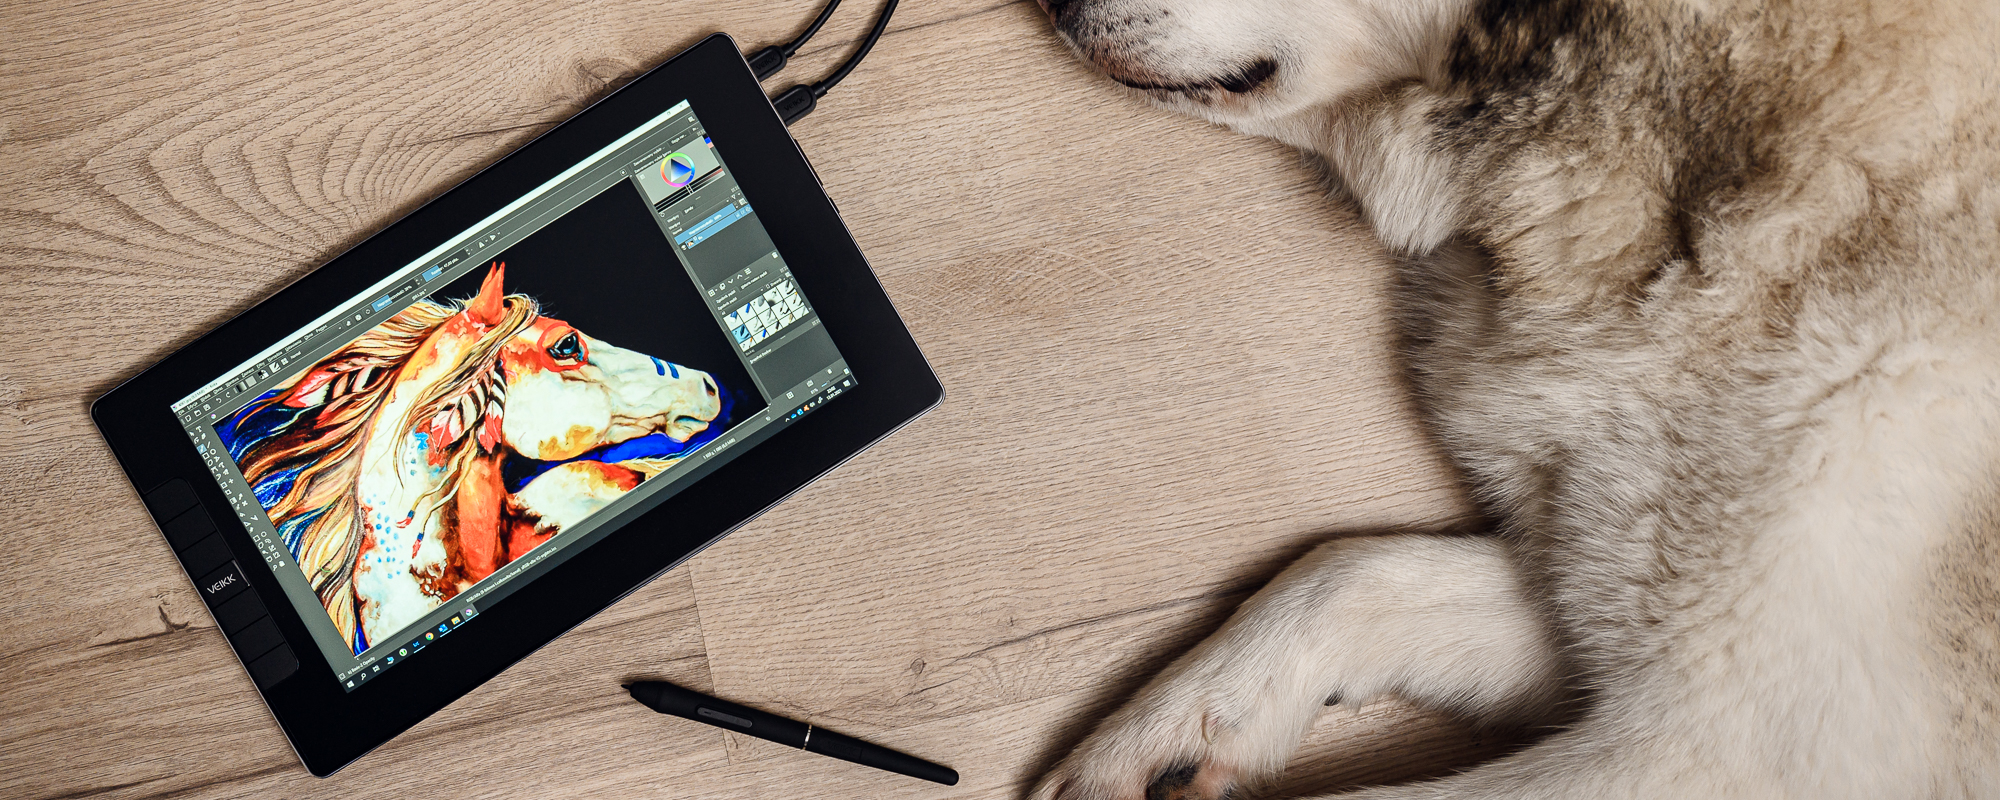 Zdjęcie - tablet graficzny z ekranem LCD Veikk VK1200 leżący na jasnych panelach obok psa